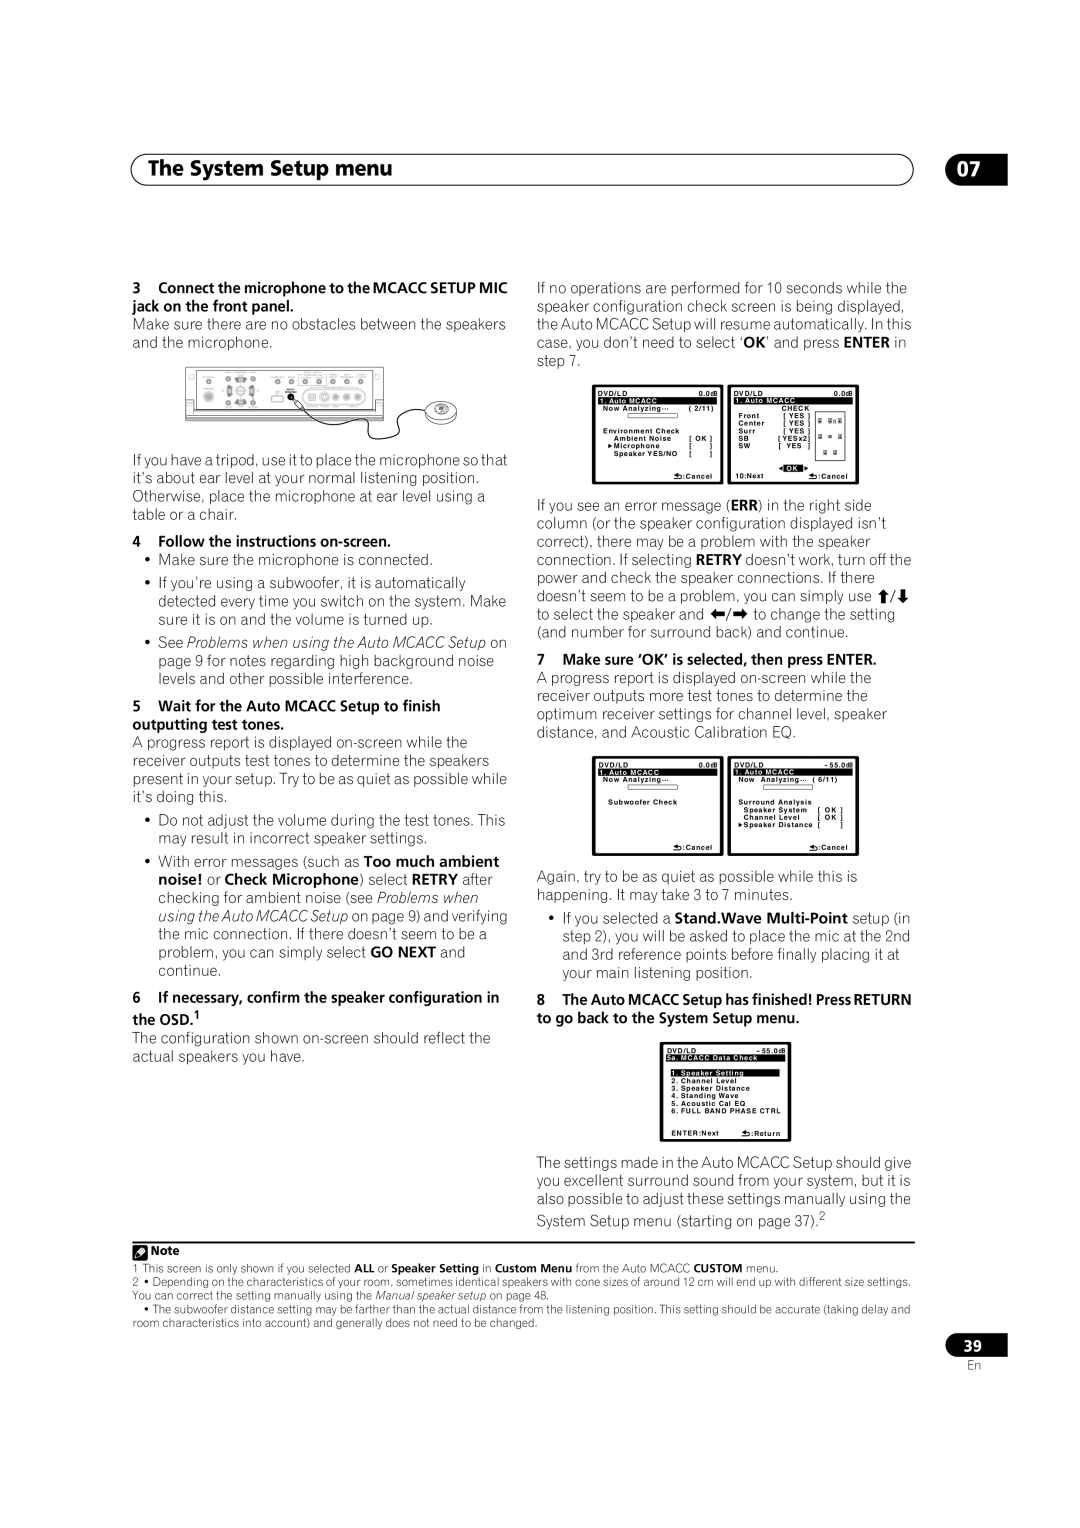 Pioneer VSX-LX70 manual The System Setup menu, 4Follow the instructions on-screen 